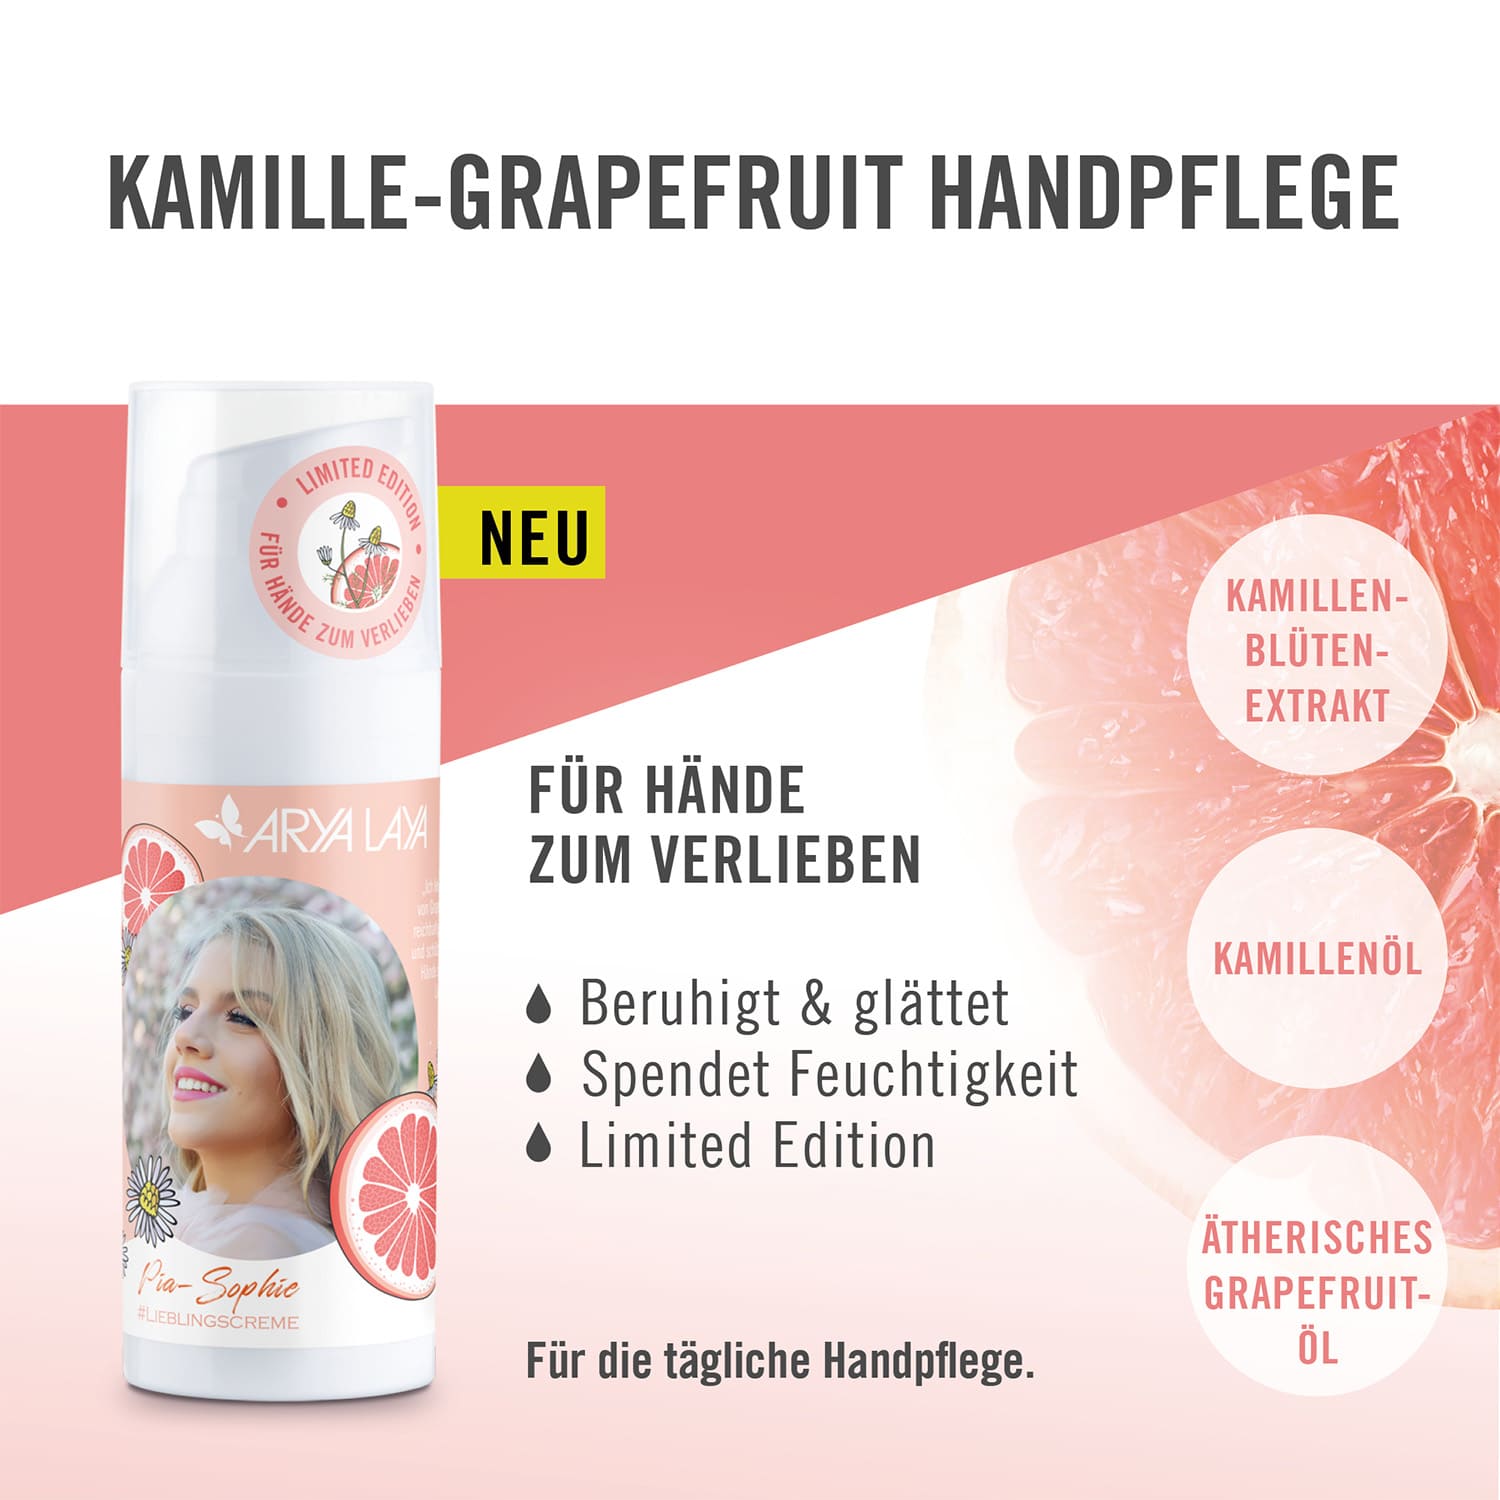 Wirkweise ARYA LAYA Kamille-Grapefruit Handpflege Edition Pia-Sophie, 50 ml